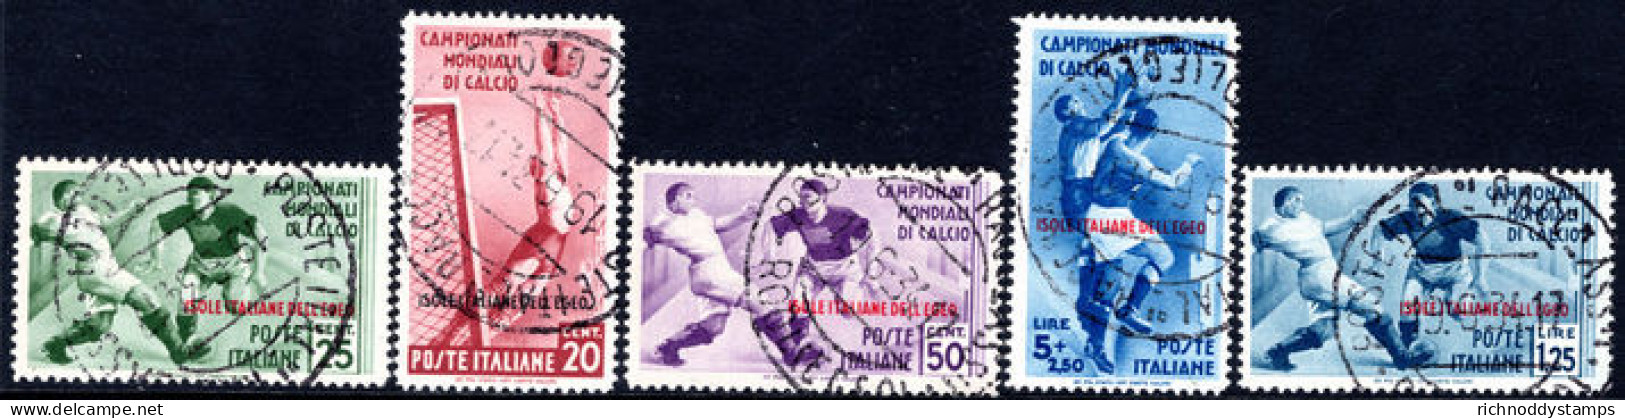 Dodecanese Islands 1934 Football Regular Set Fine Used. - Egeo